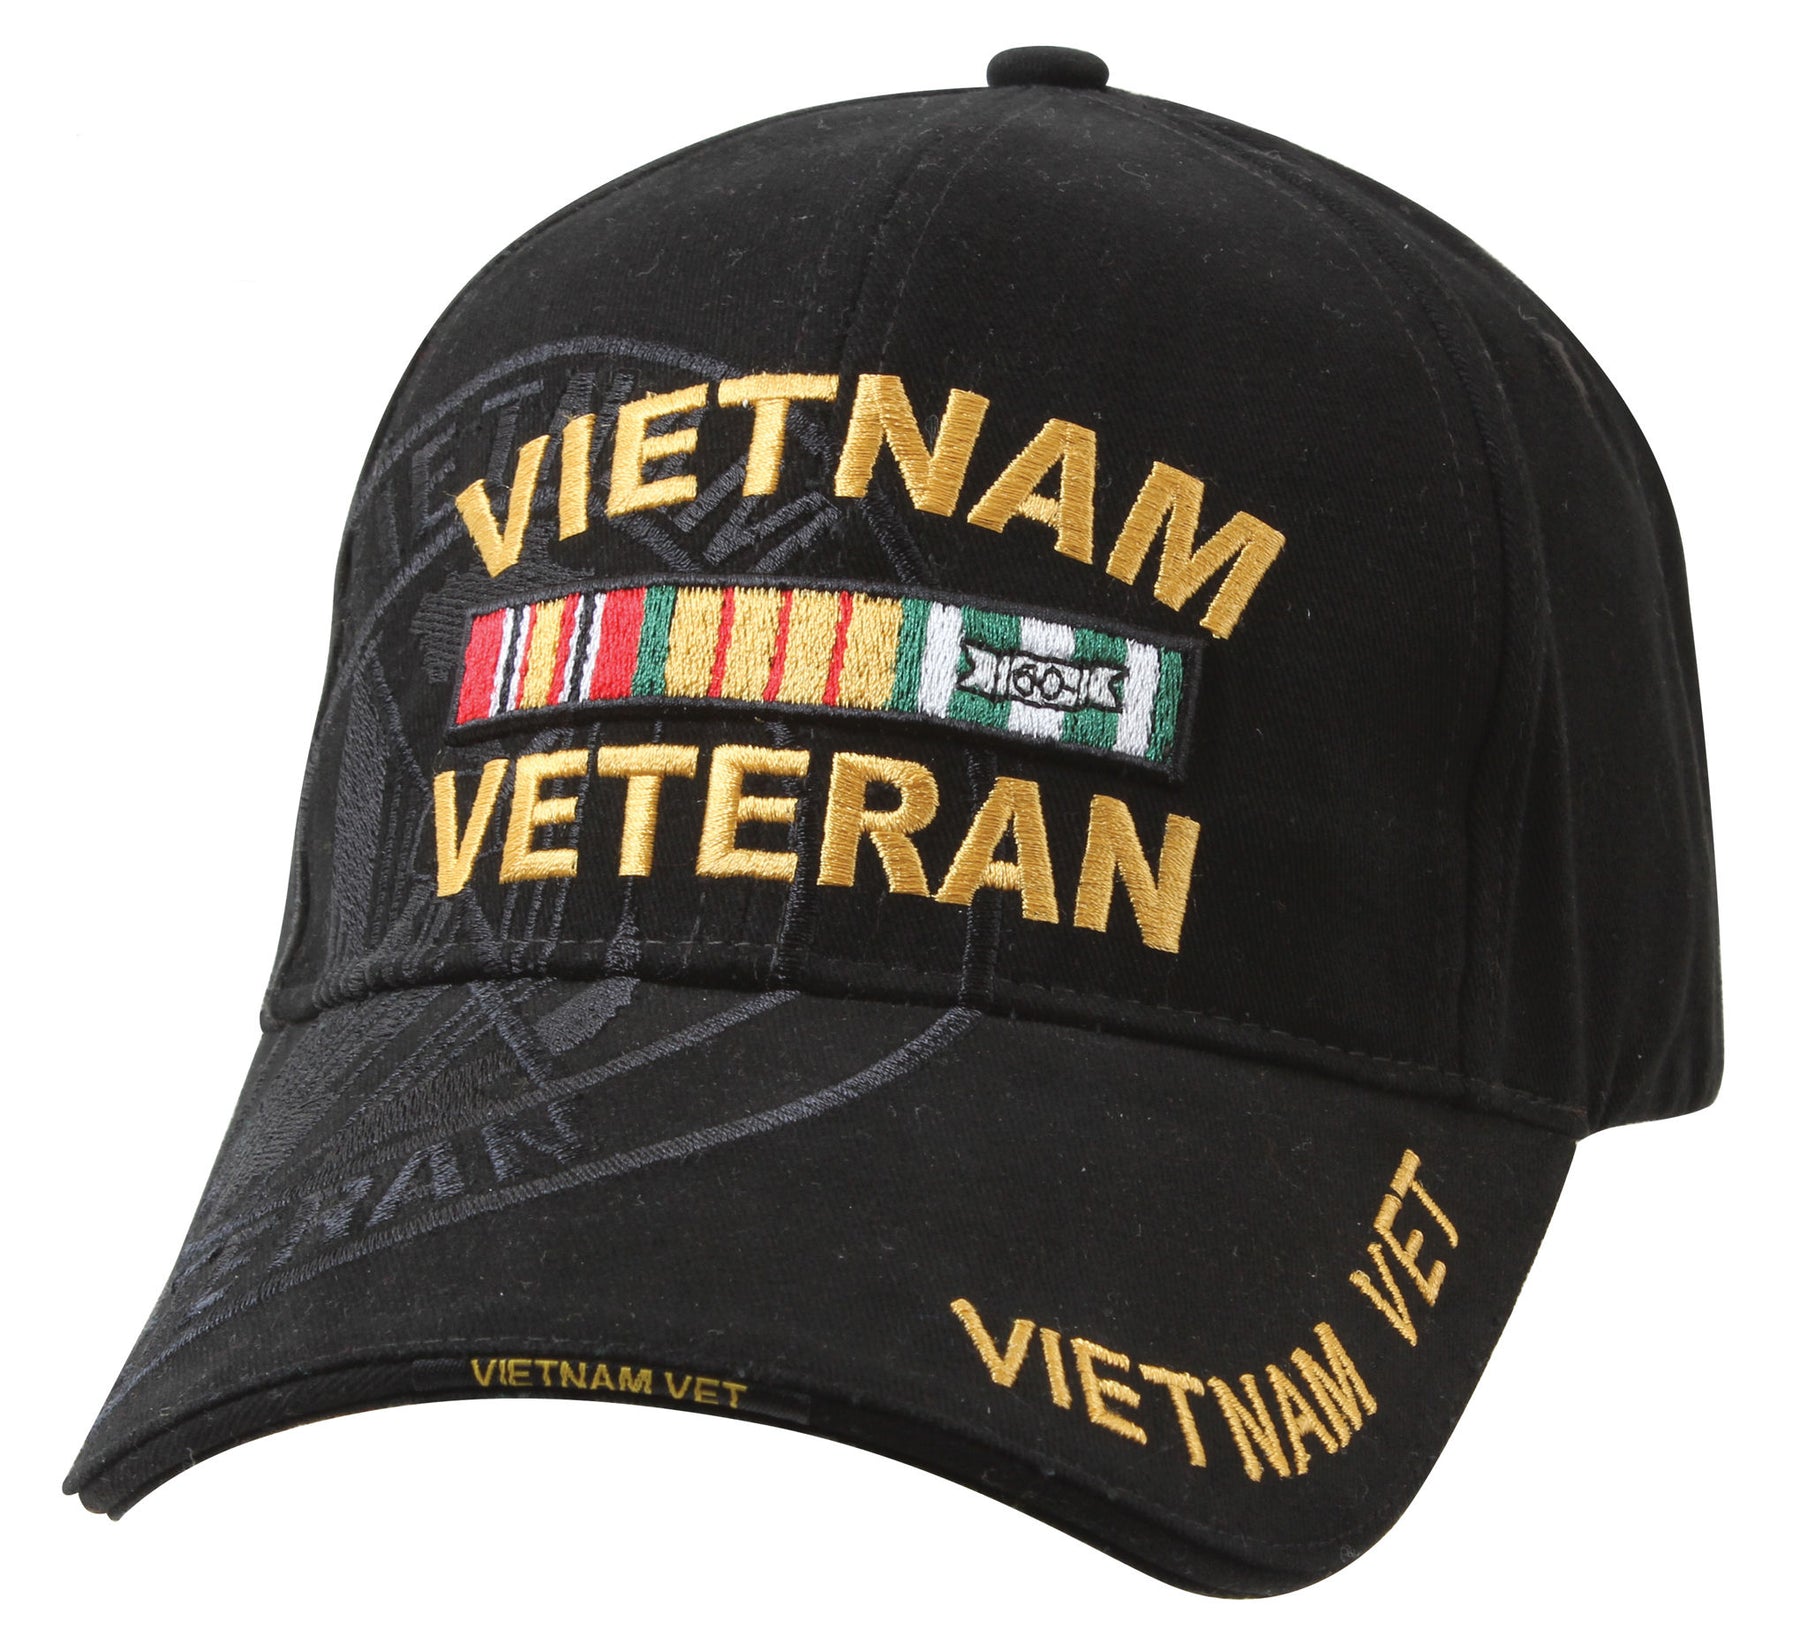 Rothco Deluxe Vietnam Veteran Military Low Profile Shadow Cap